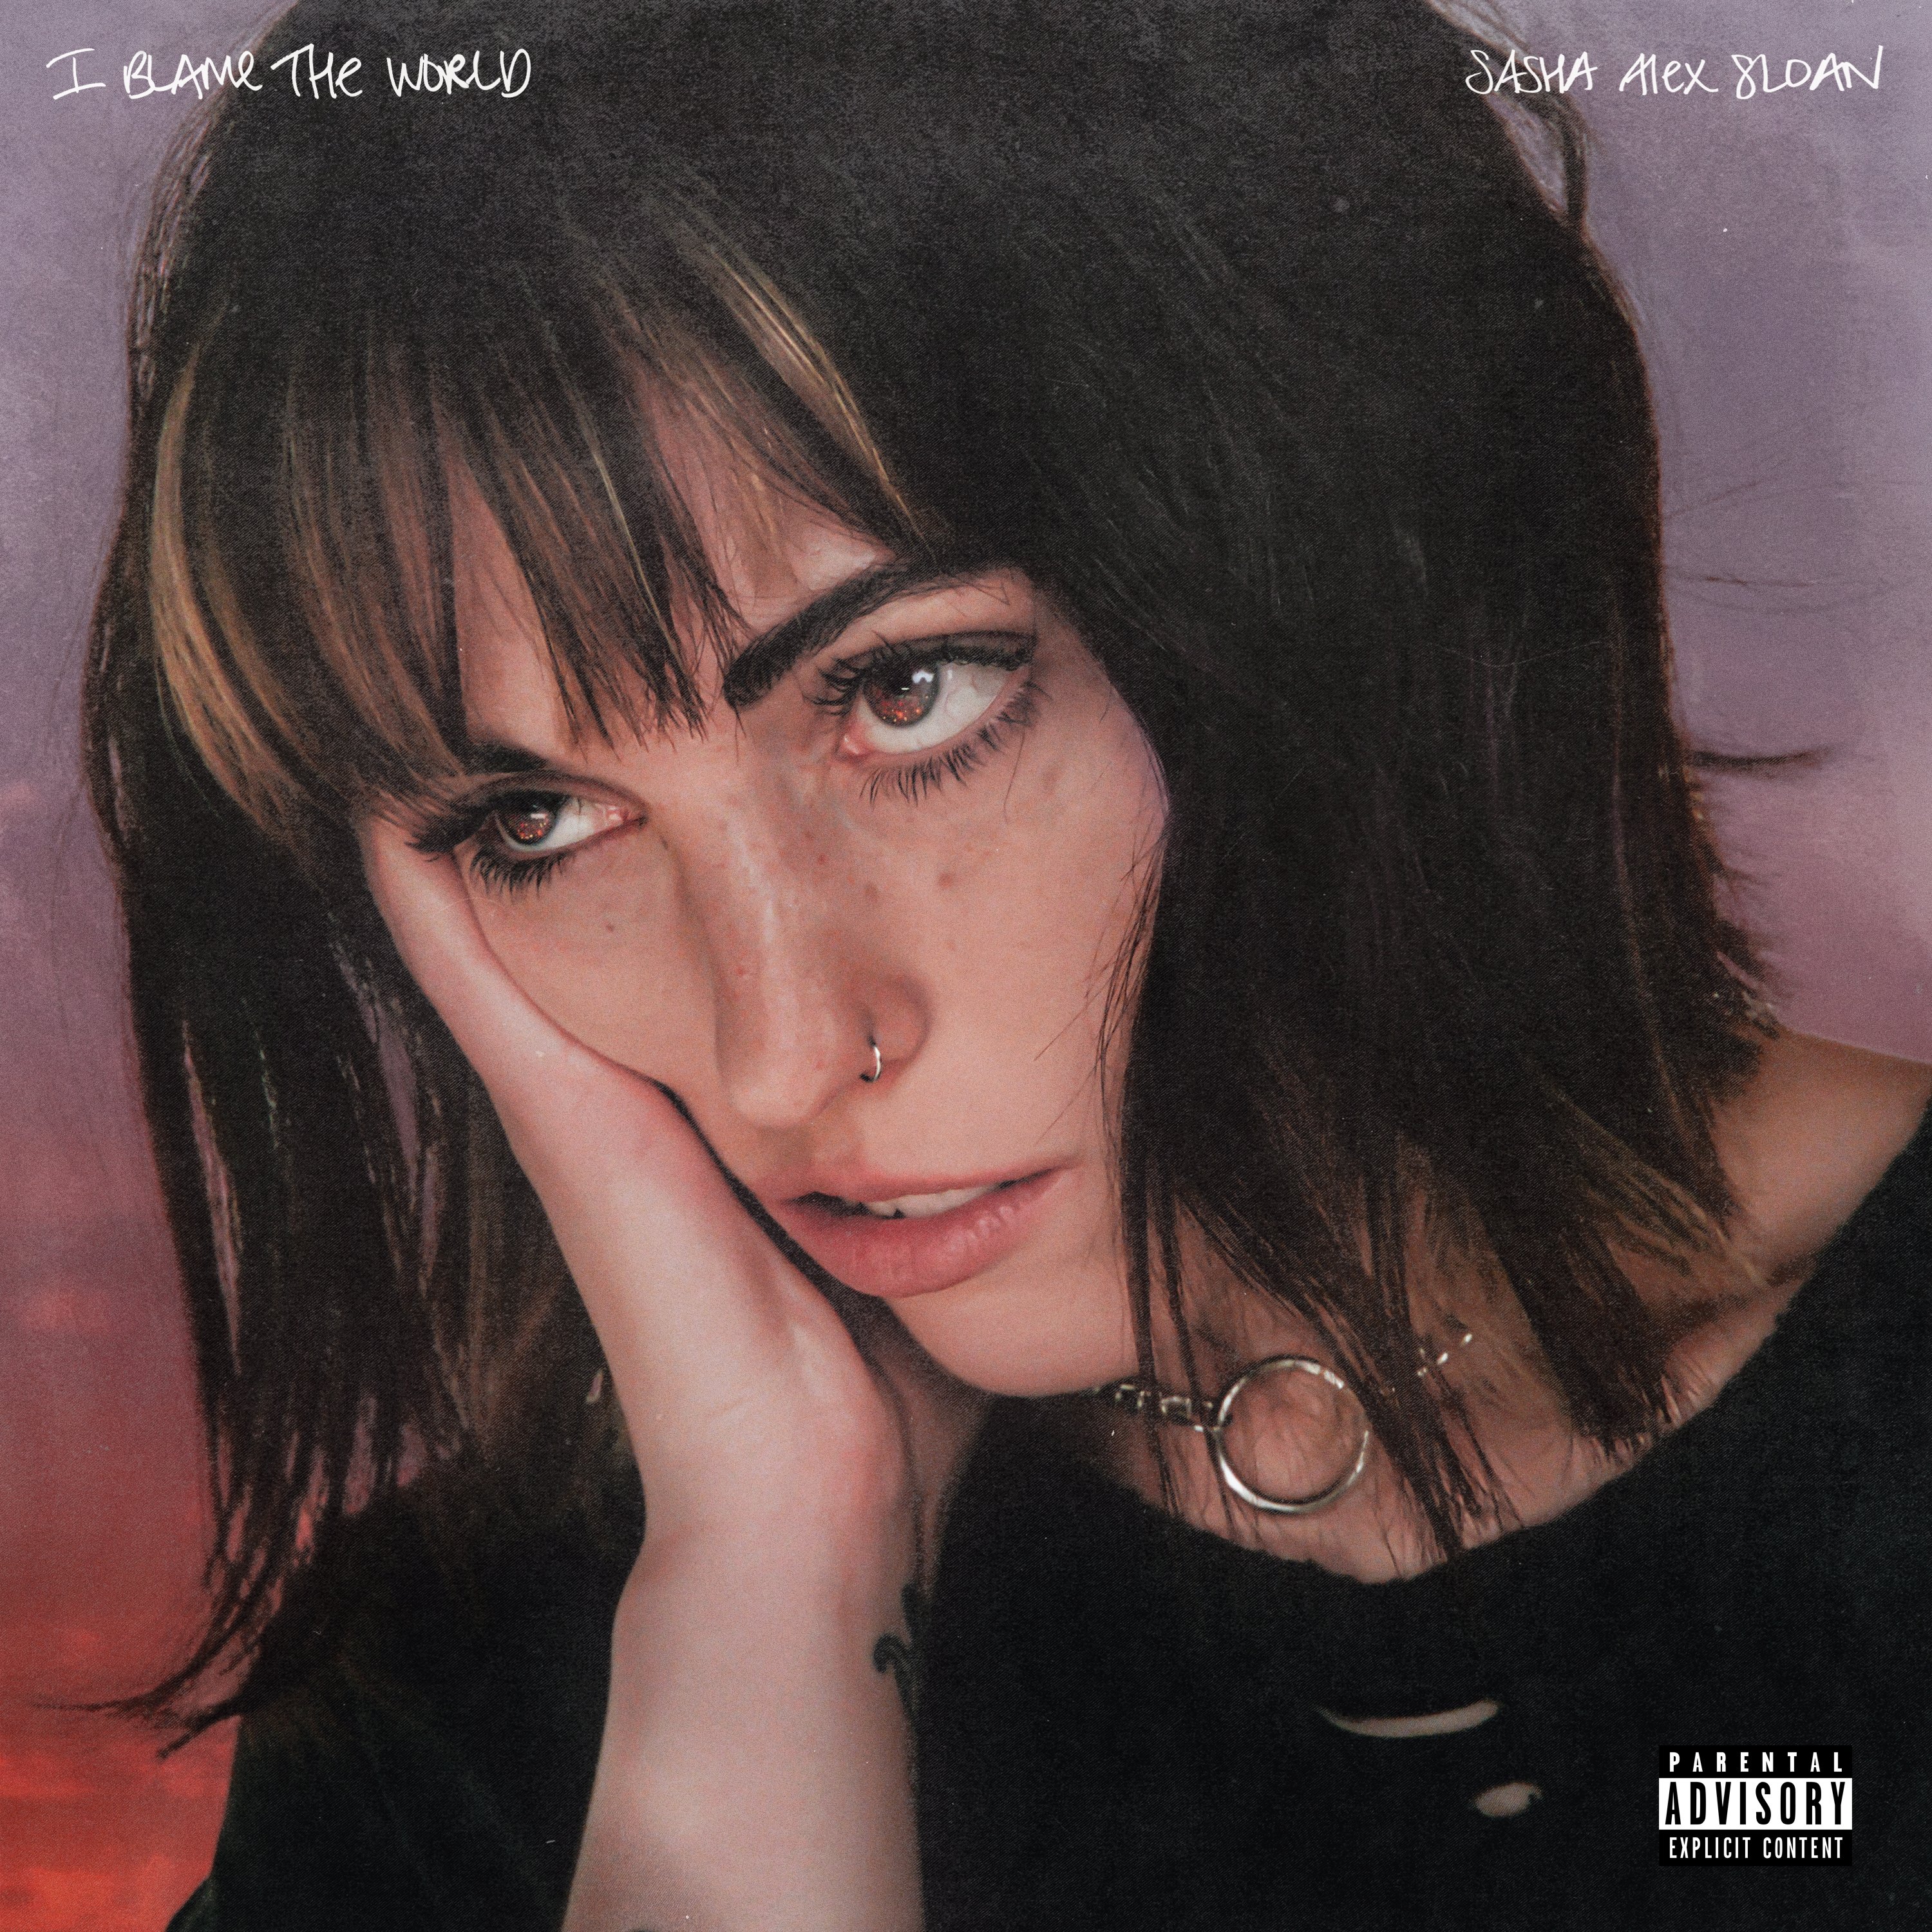 Sasha Alex Sloan I Blame The World cover artwork